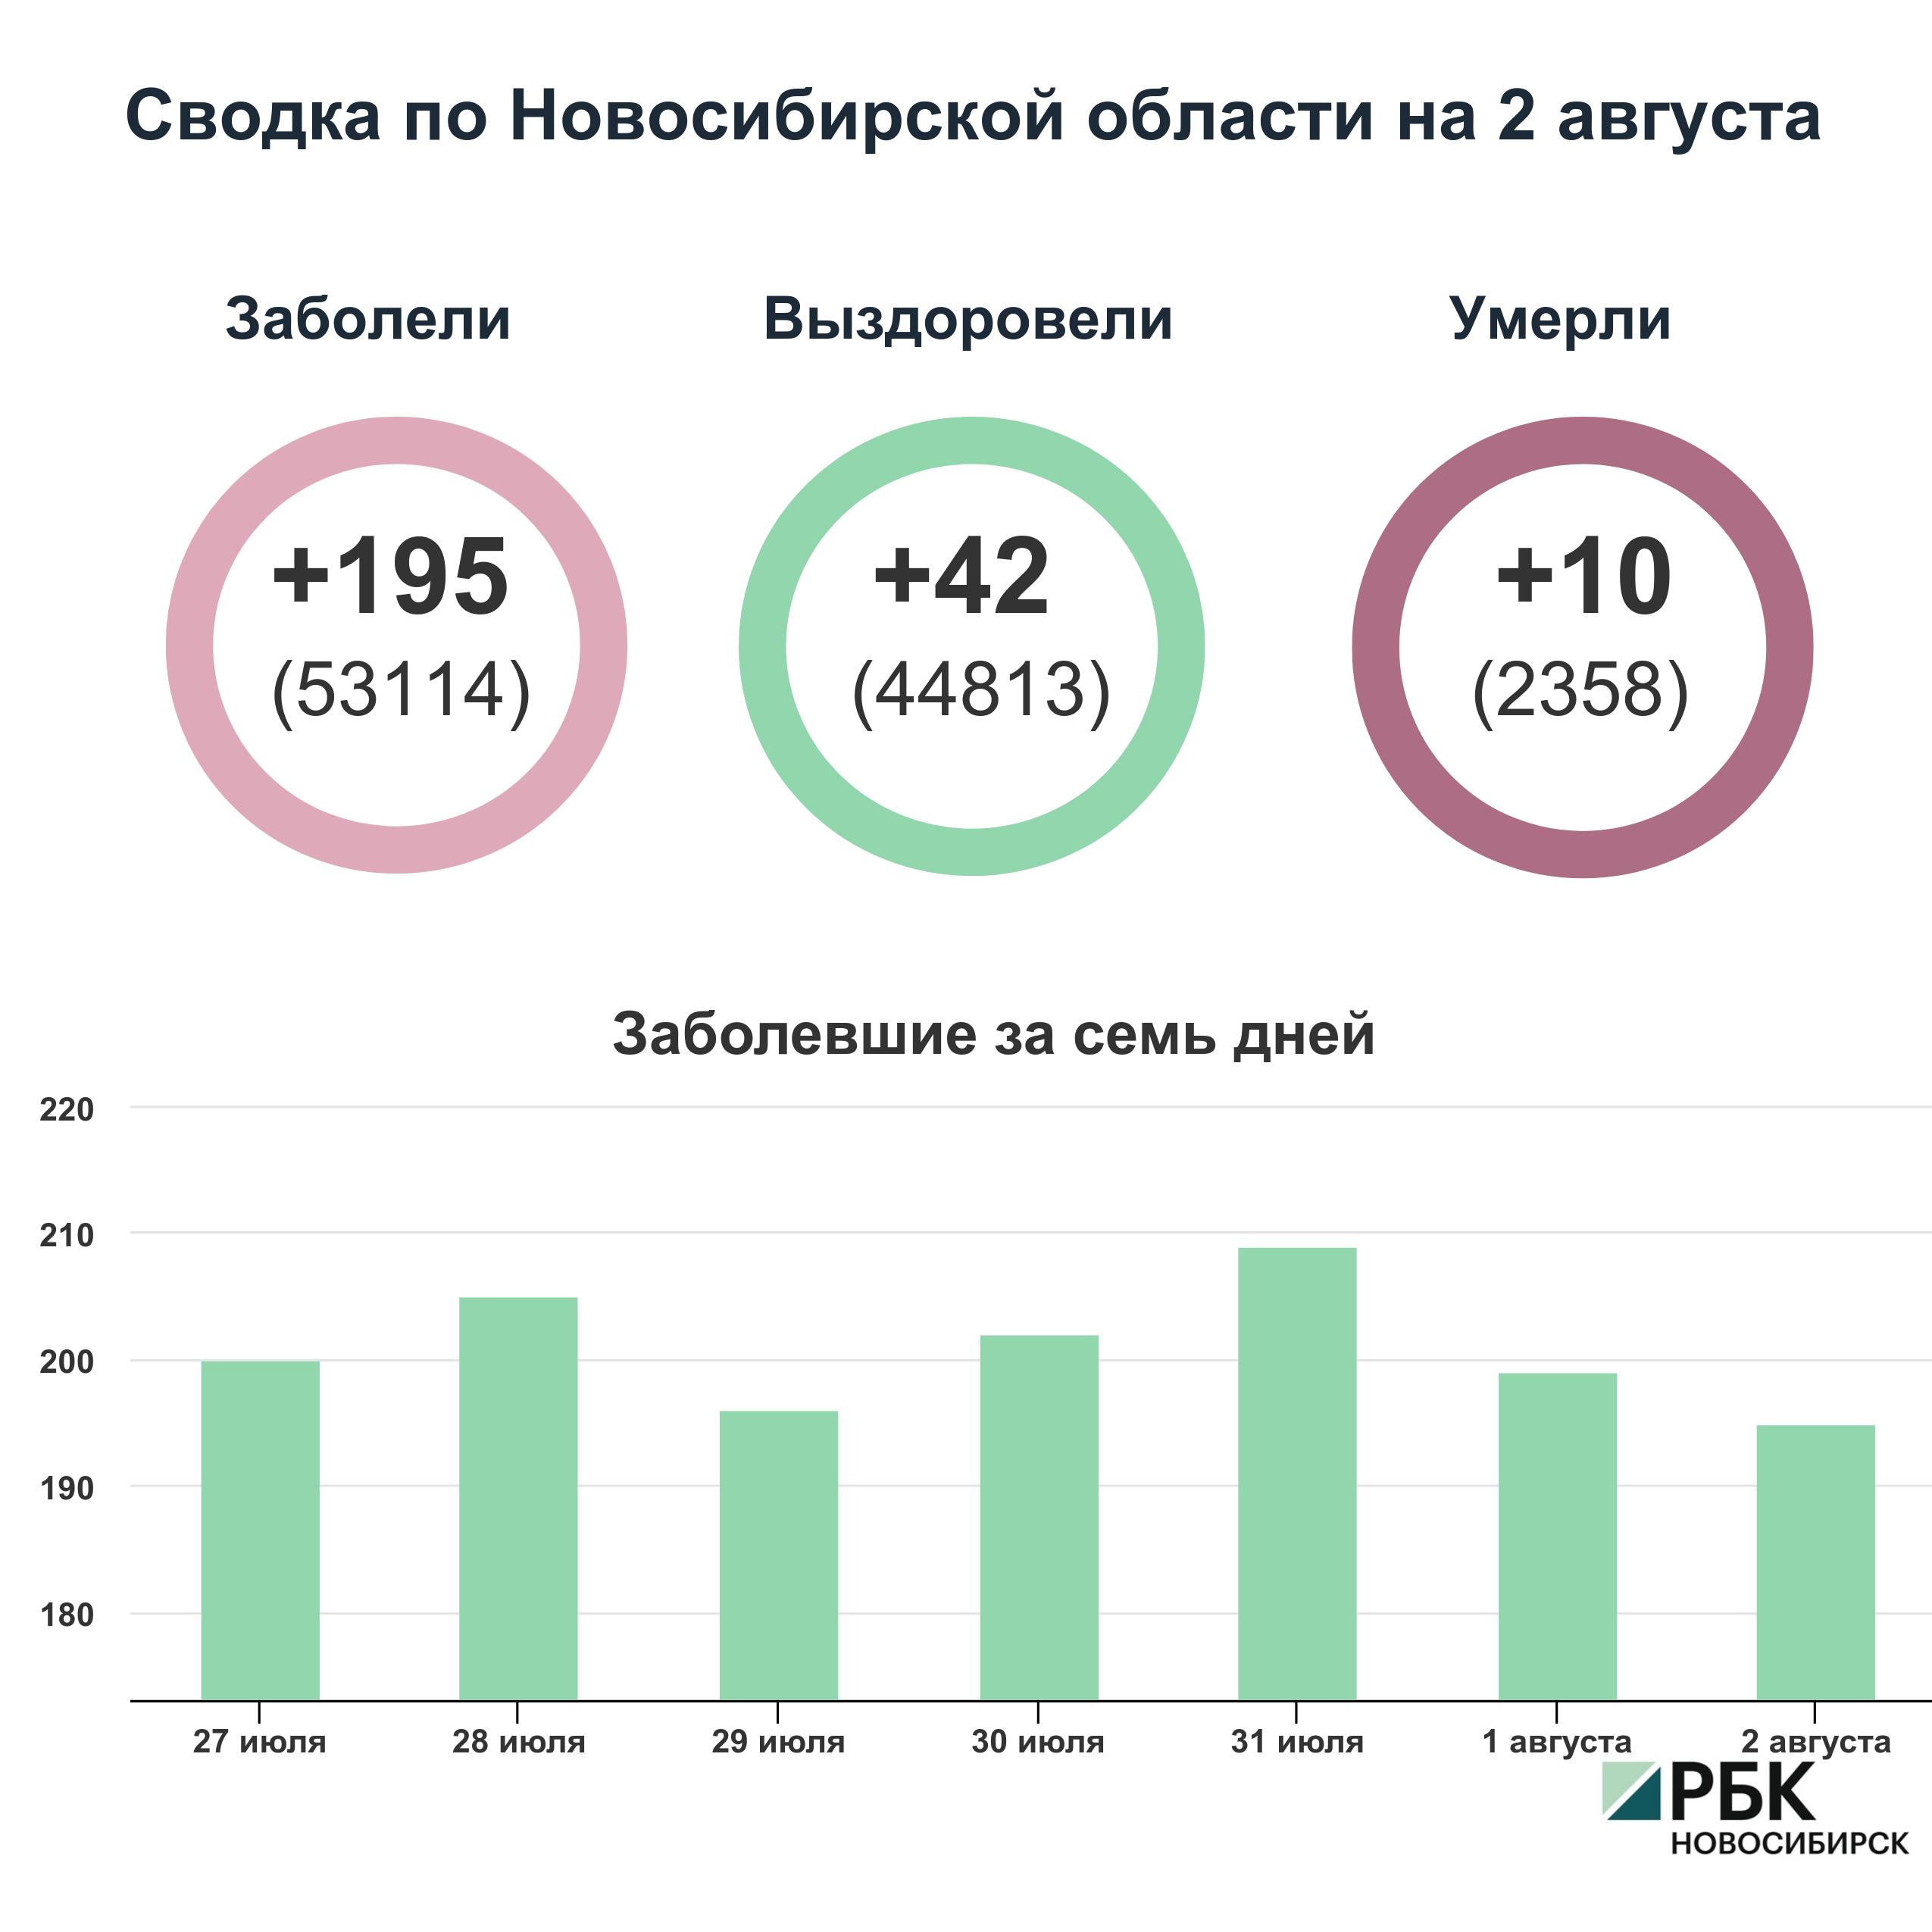 Коронавирус в Новосибирске: сводка на 2 августа